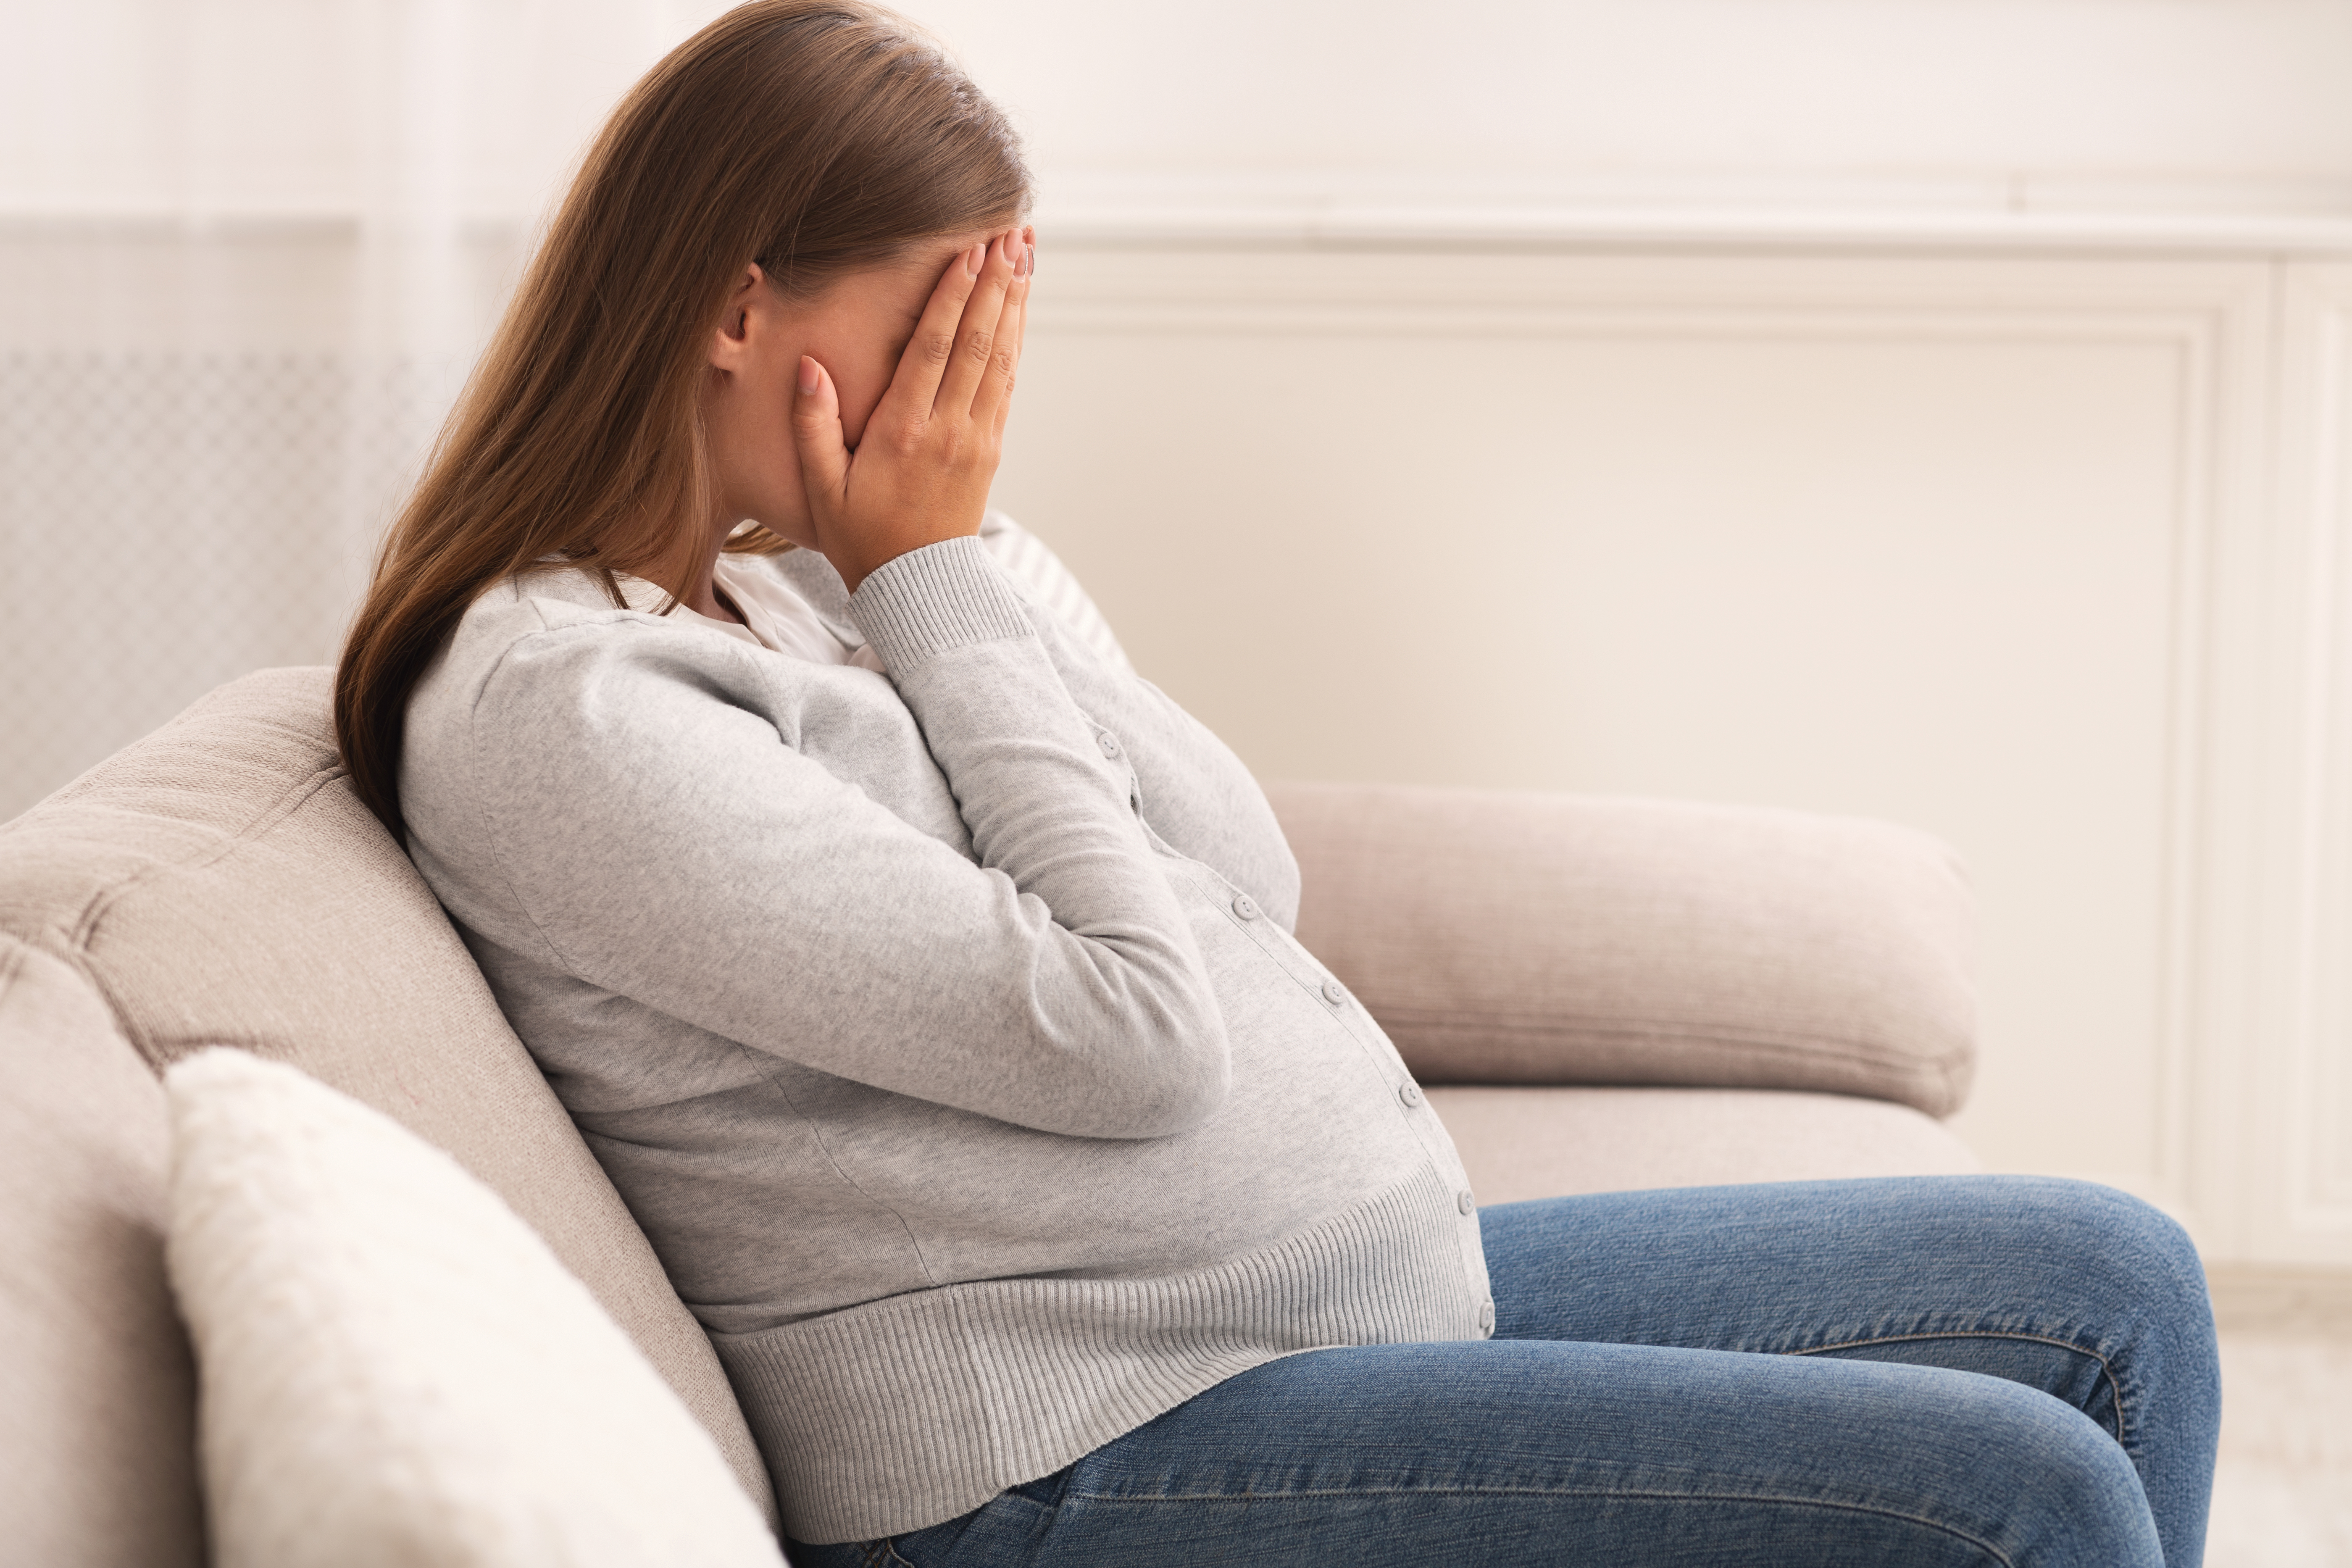 A sad pregnant woman | Source: Shutterstock